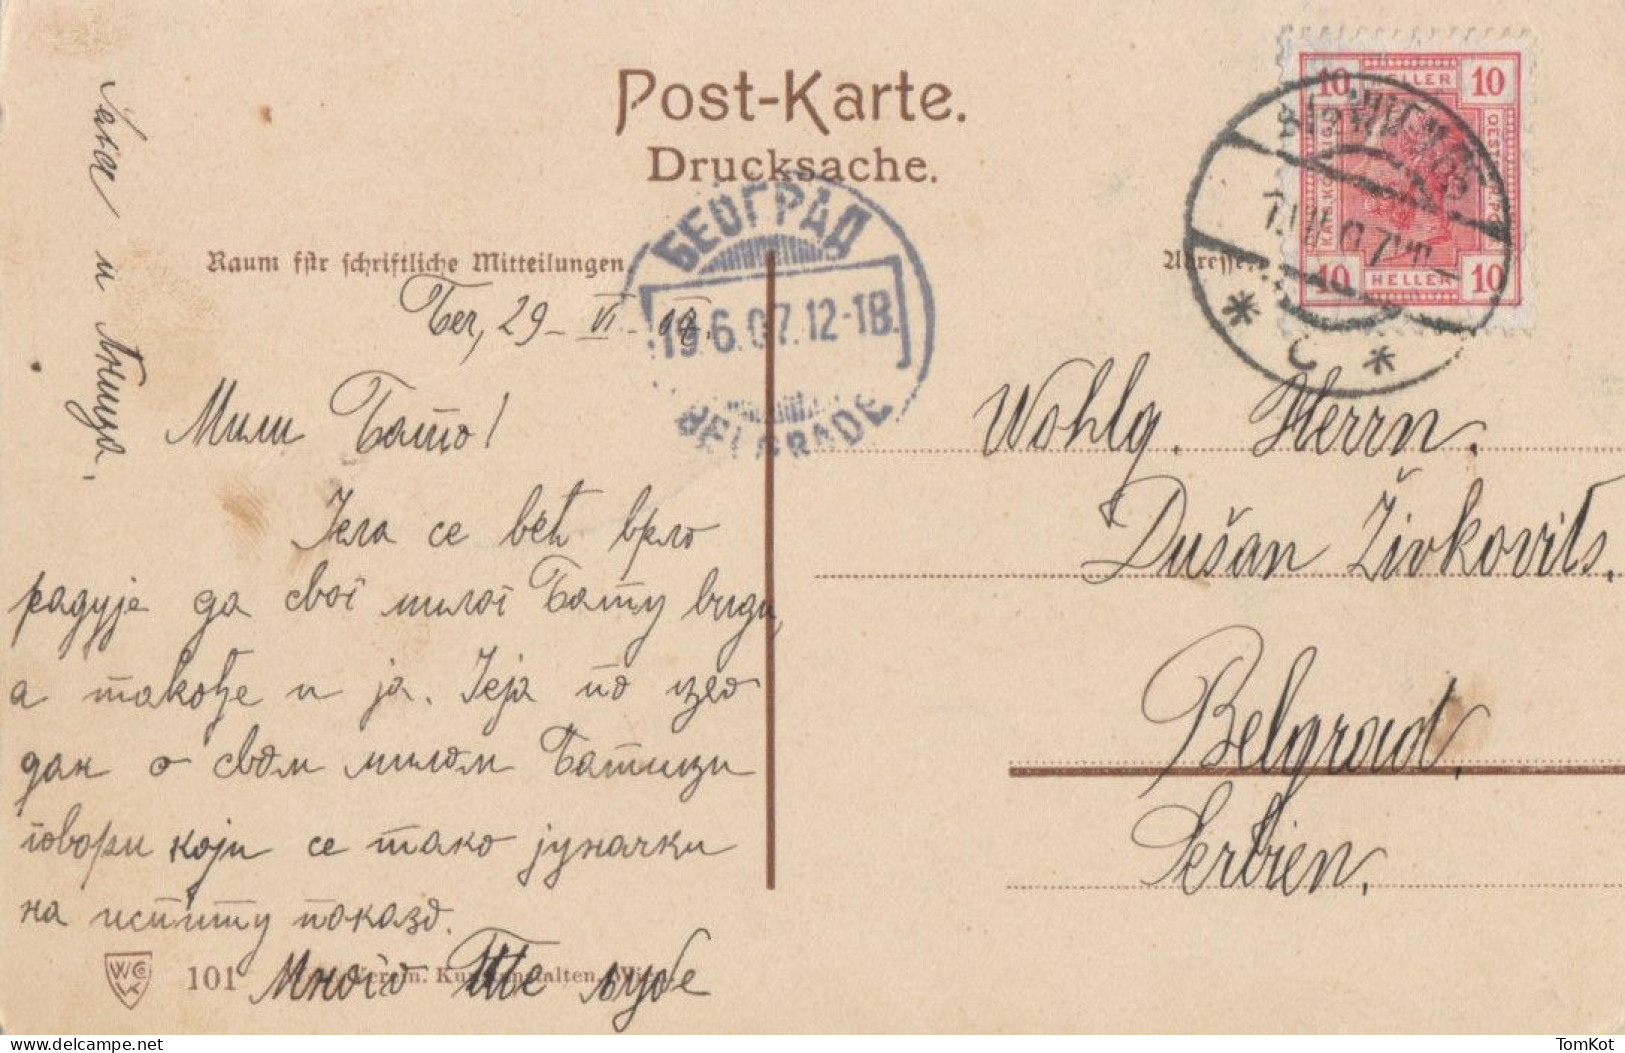 Old Postcard Wien I. Maria Theresien - Platz. - Cartas